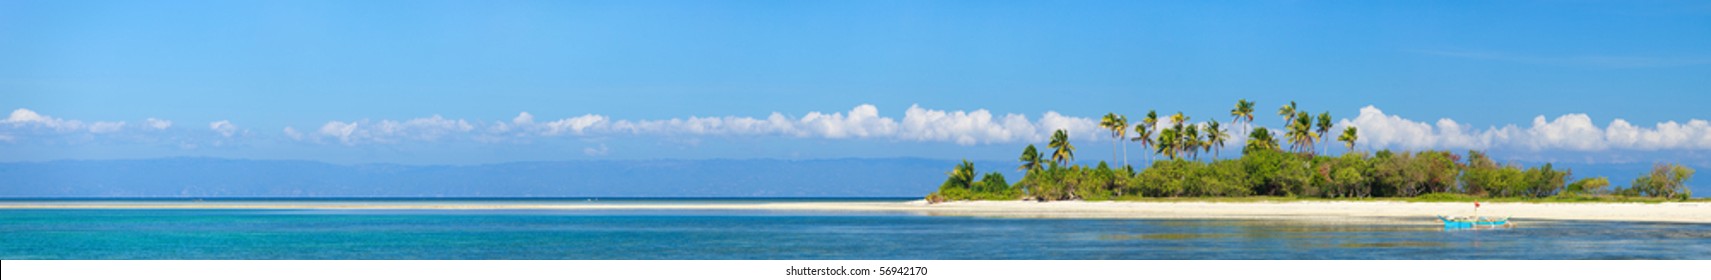 Panoramic photo of perfect tropical island in ocean